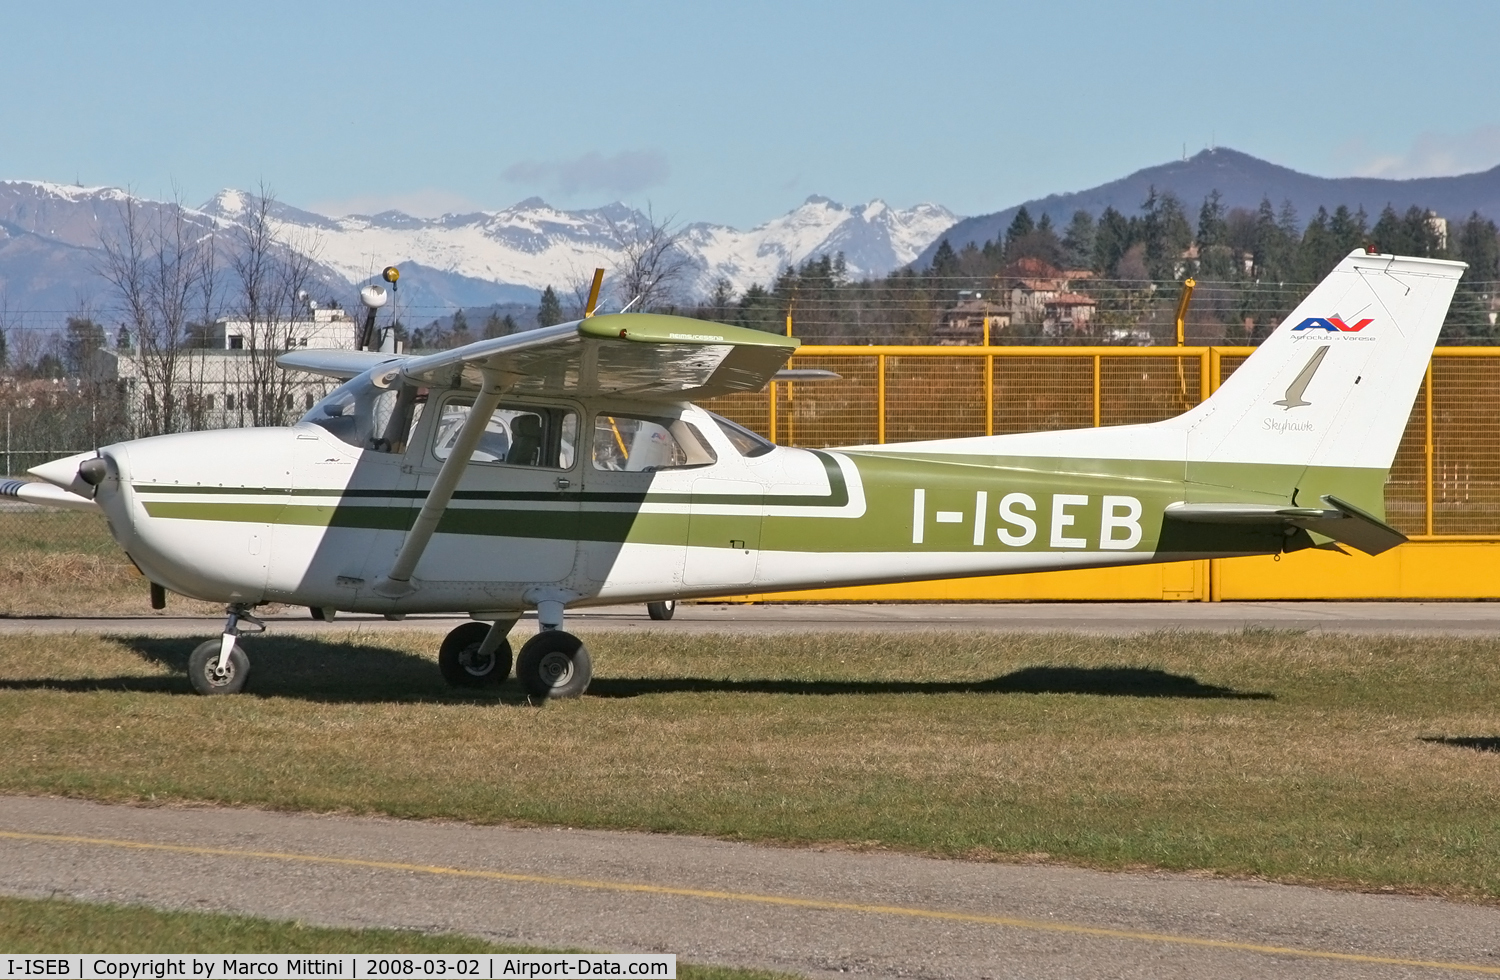 I-ISEB, 1974 Reims F172M Skyhawk C/N 1133, Operated by Aeroclub Varese